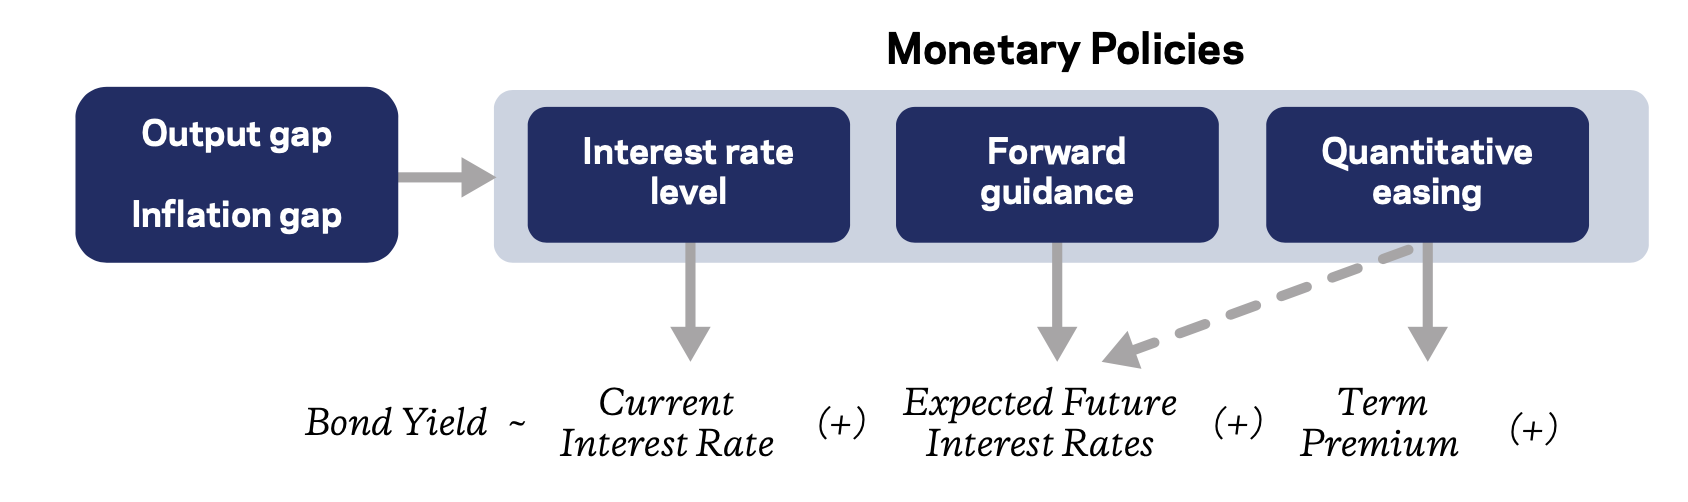 monetary policies